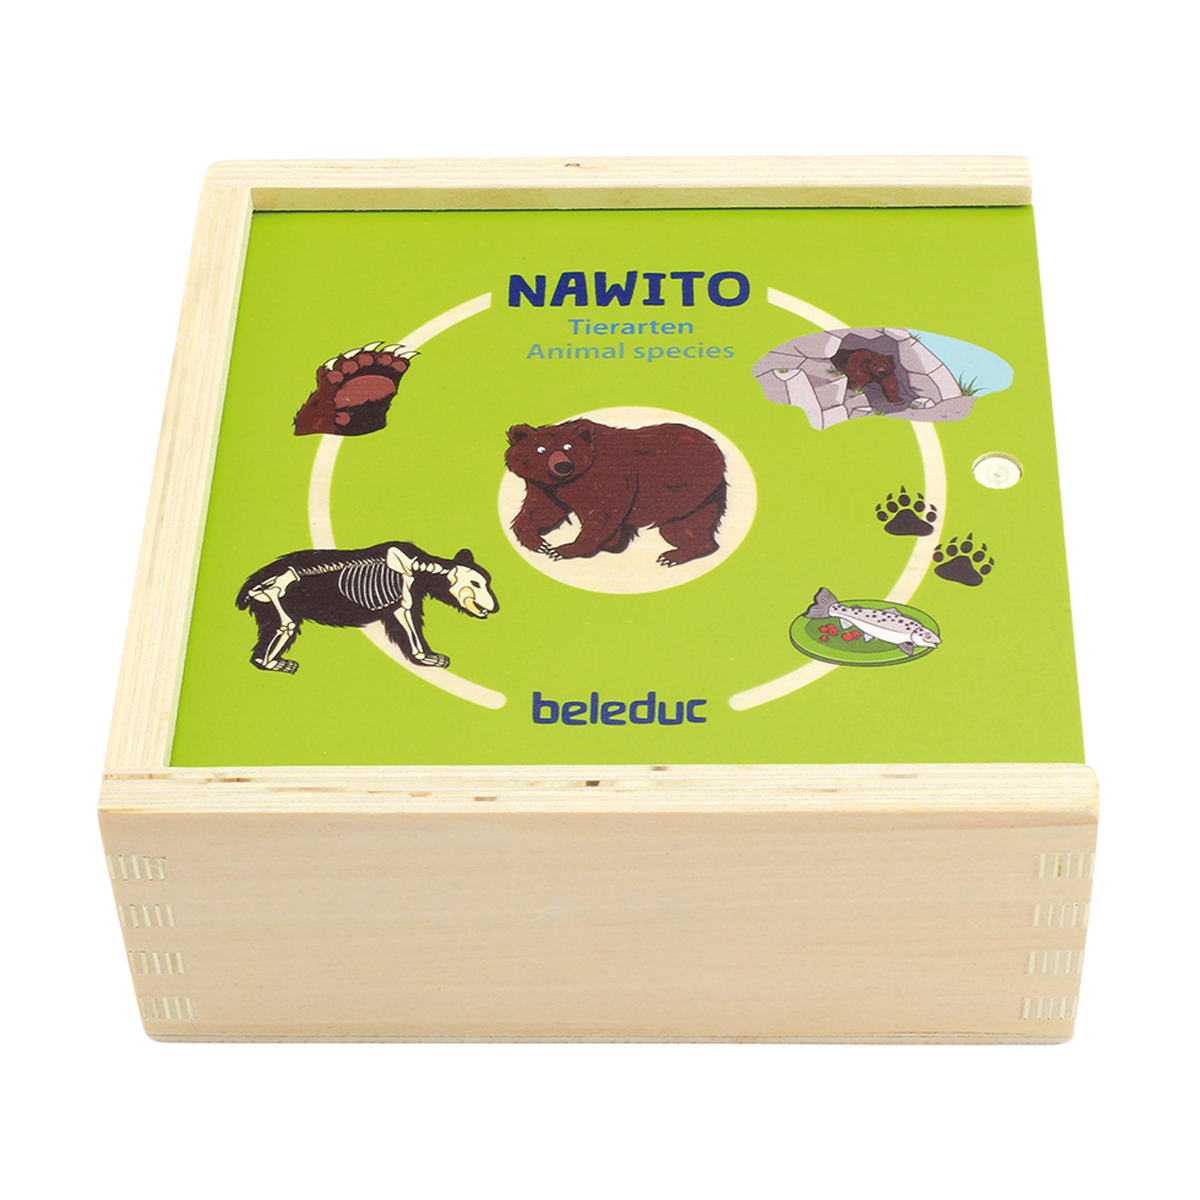 NAWITO "Animal species"